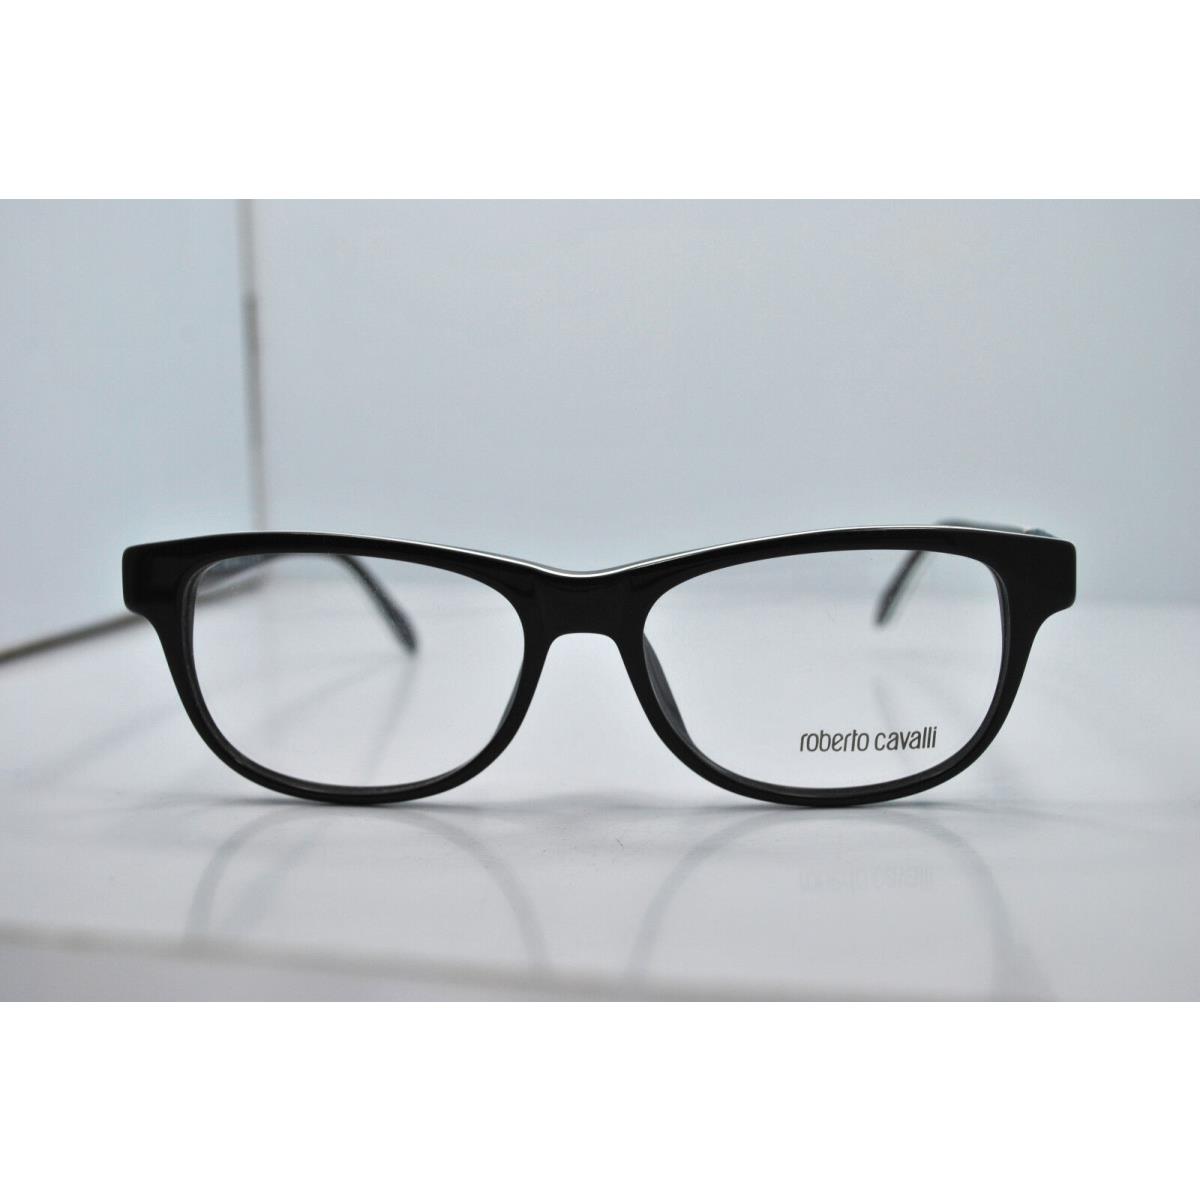 Roberto Cavalli eyeglasses  - 005 , Black Frame 0